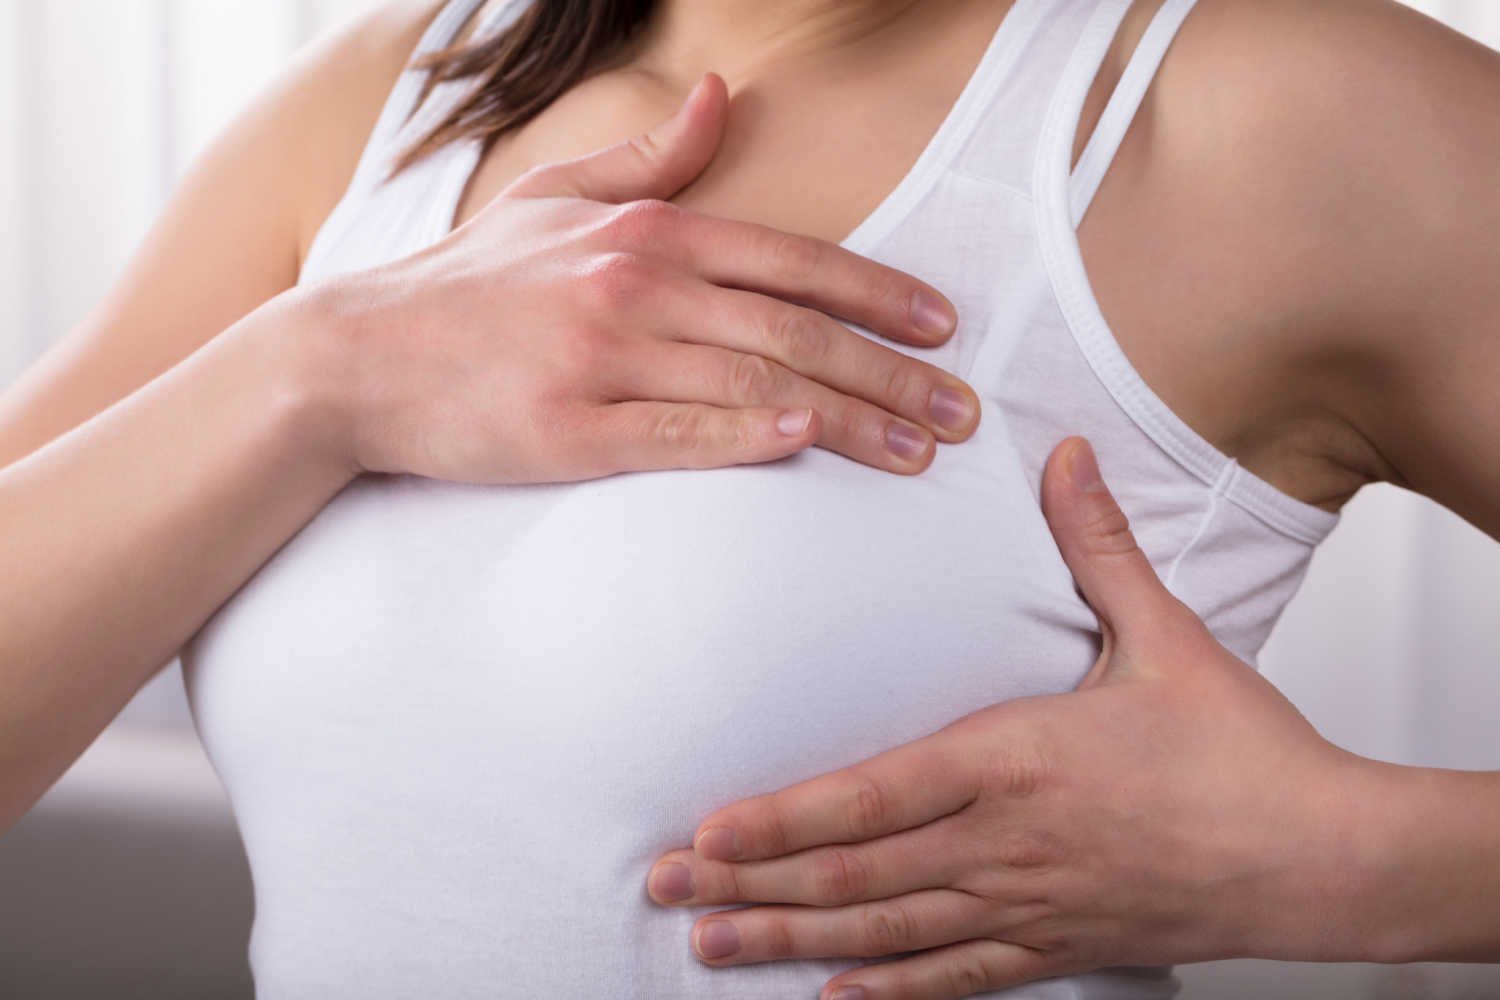 Symptoms of Thrush in Breastfeeding Mothers